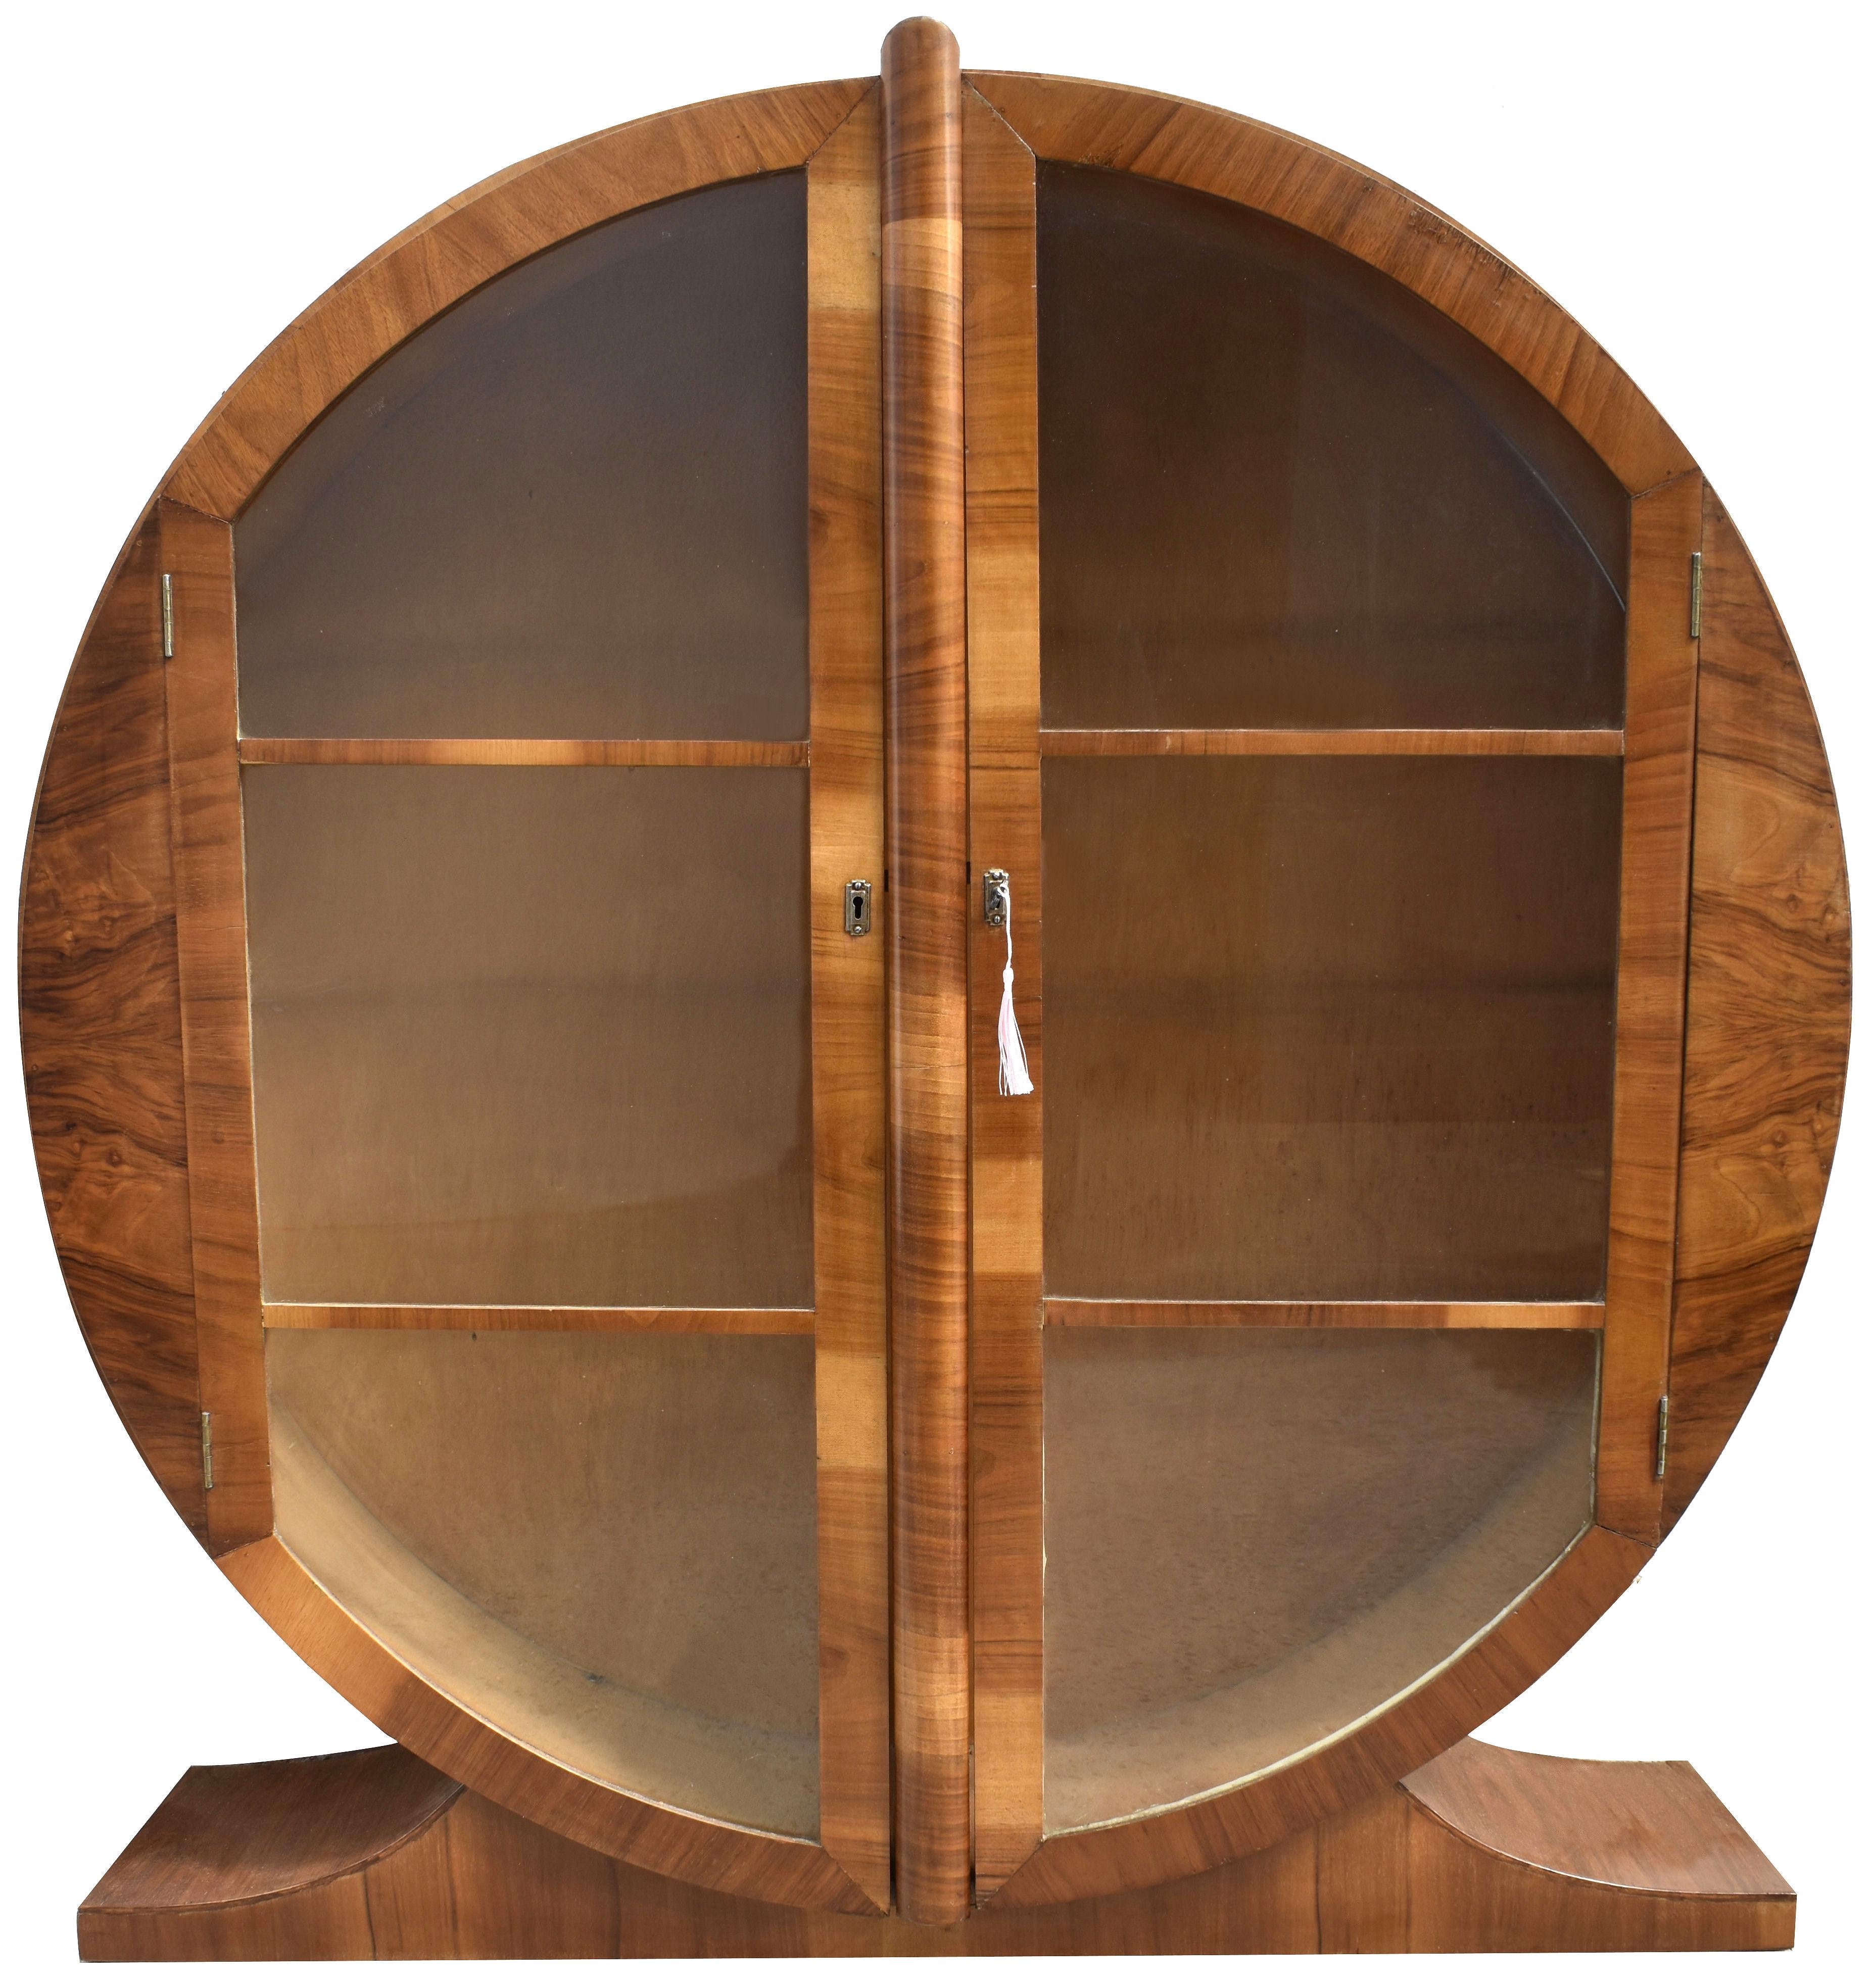 20th Century Art Deco Spectacular Circular Display Cabinet Vitrine In Walnut, c1930s For Sale